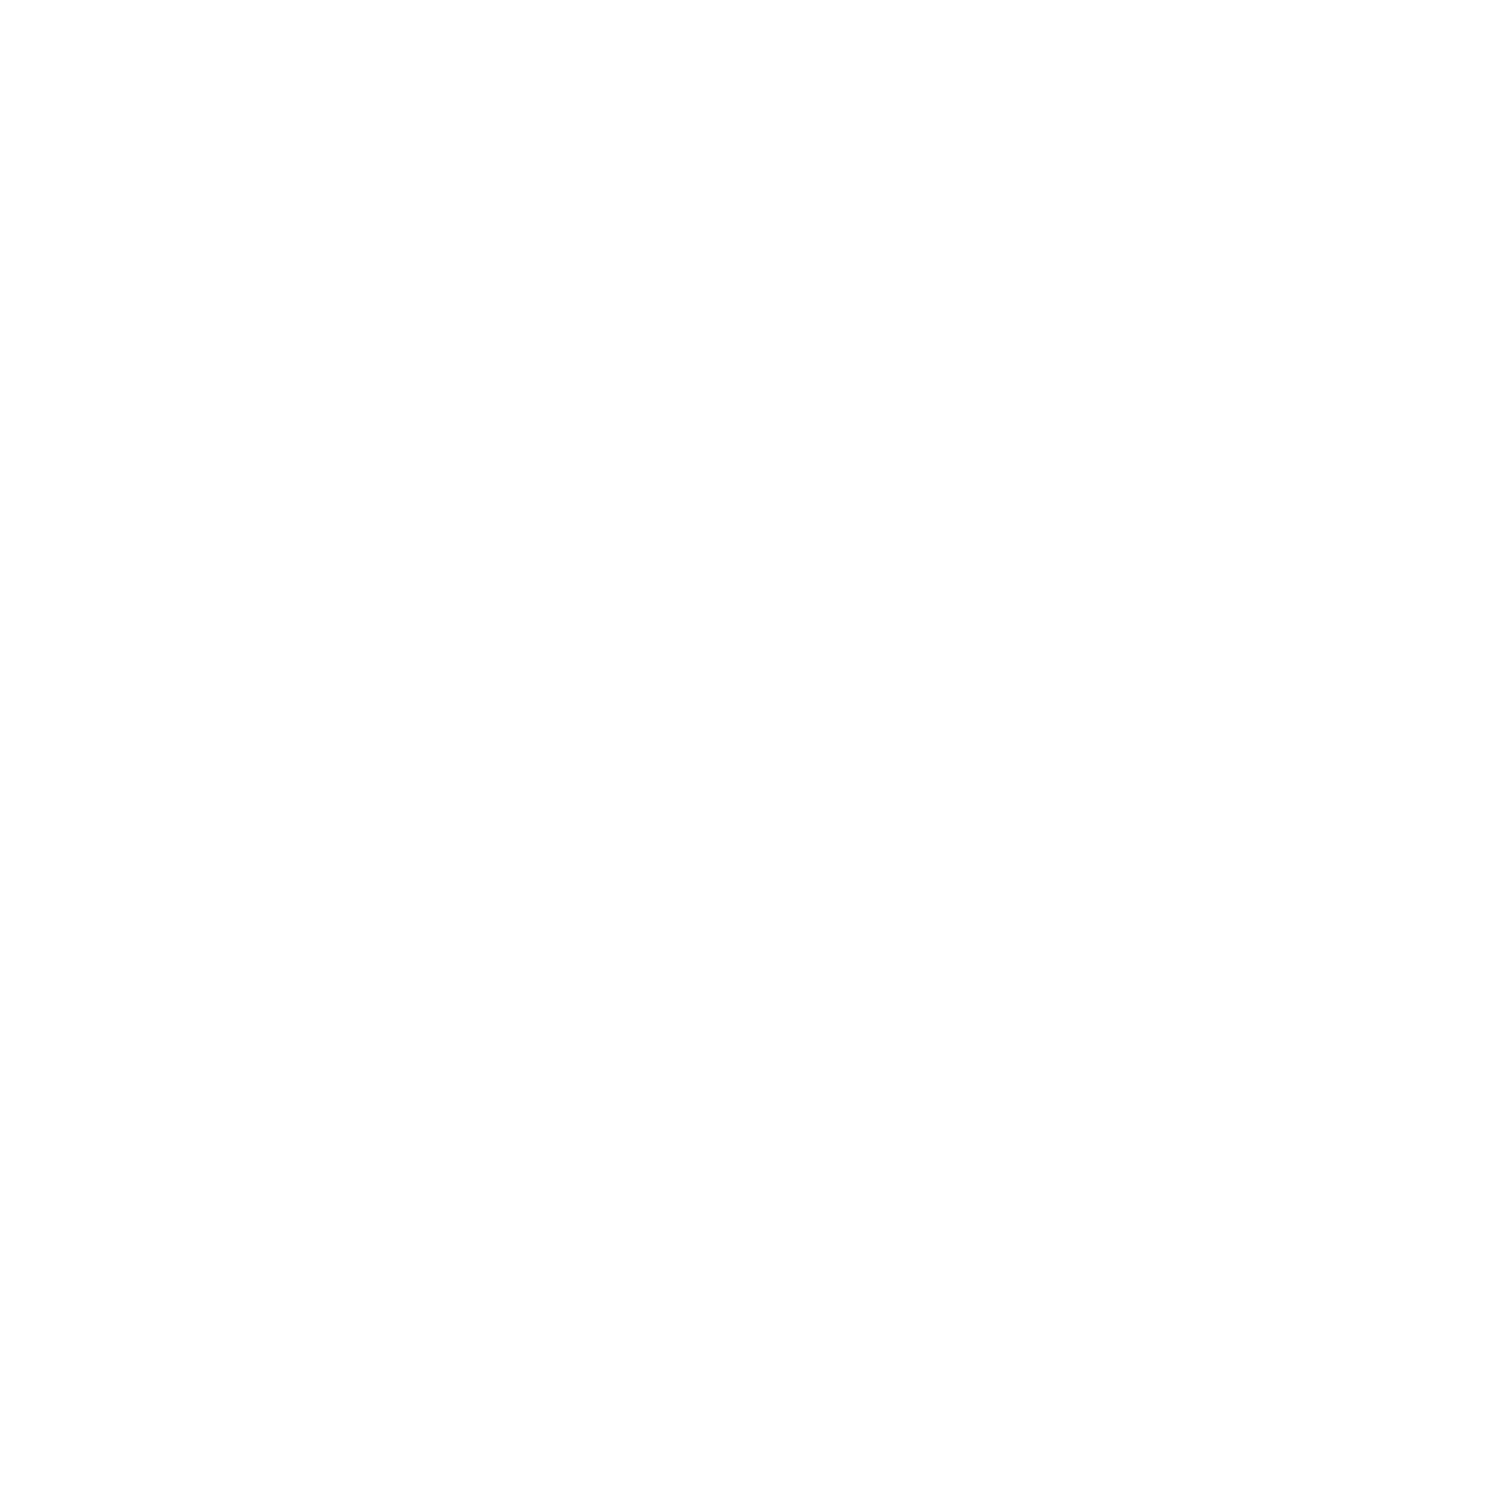 Brandon Lewis